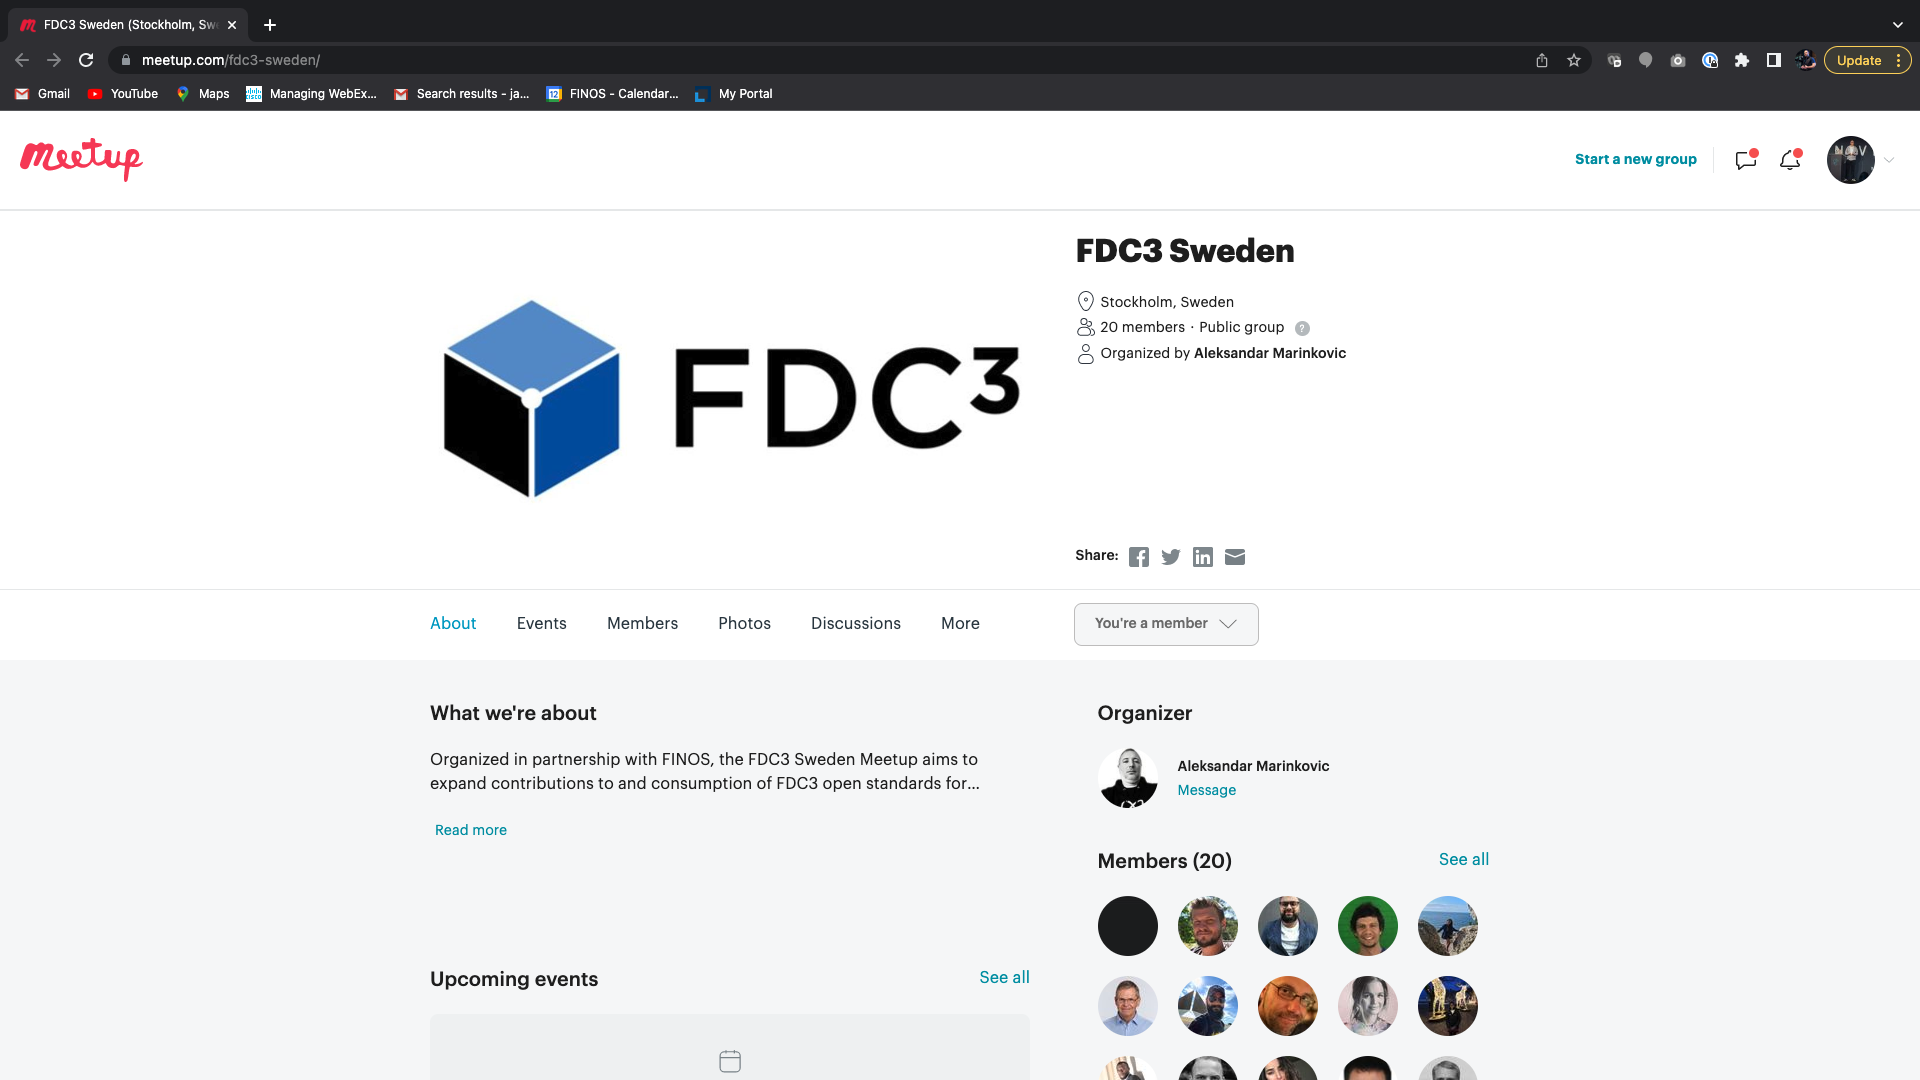 FDC3 Sweden